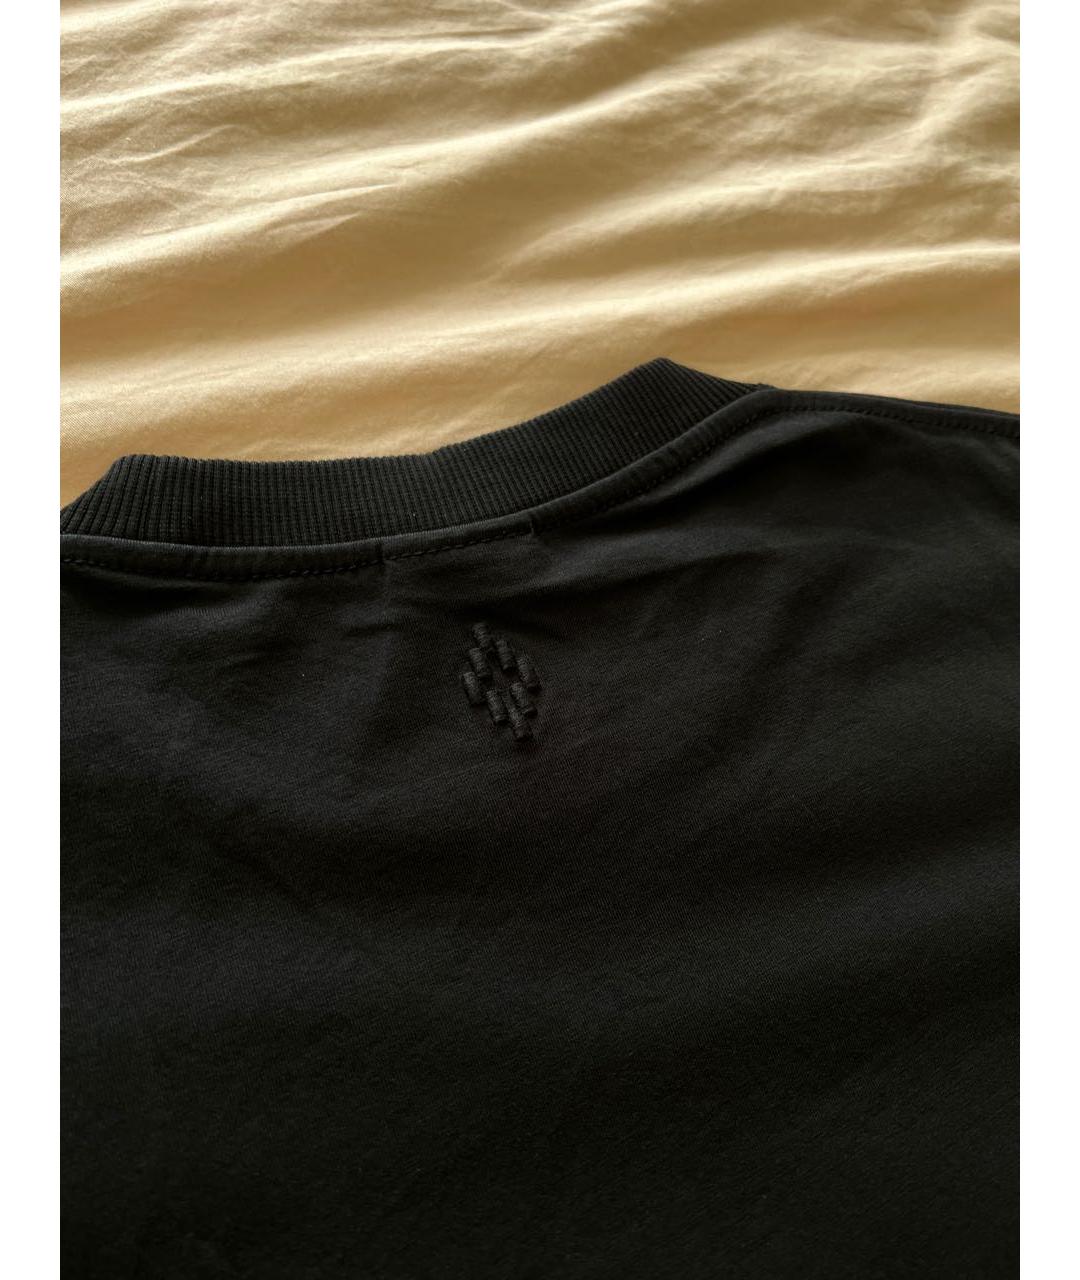 MARCELO BURLON COUNTY OF MILAN Черная хлопковая футболка, фото 7